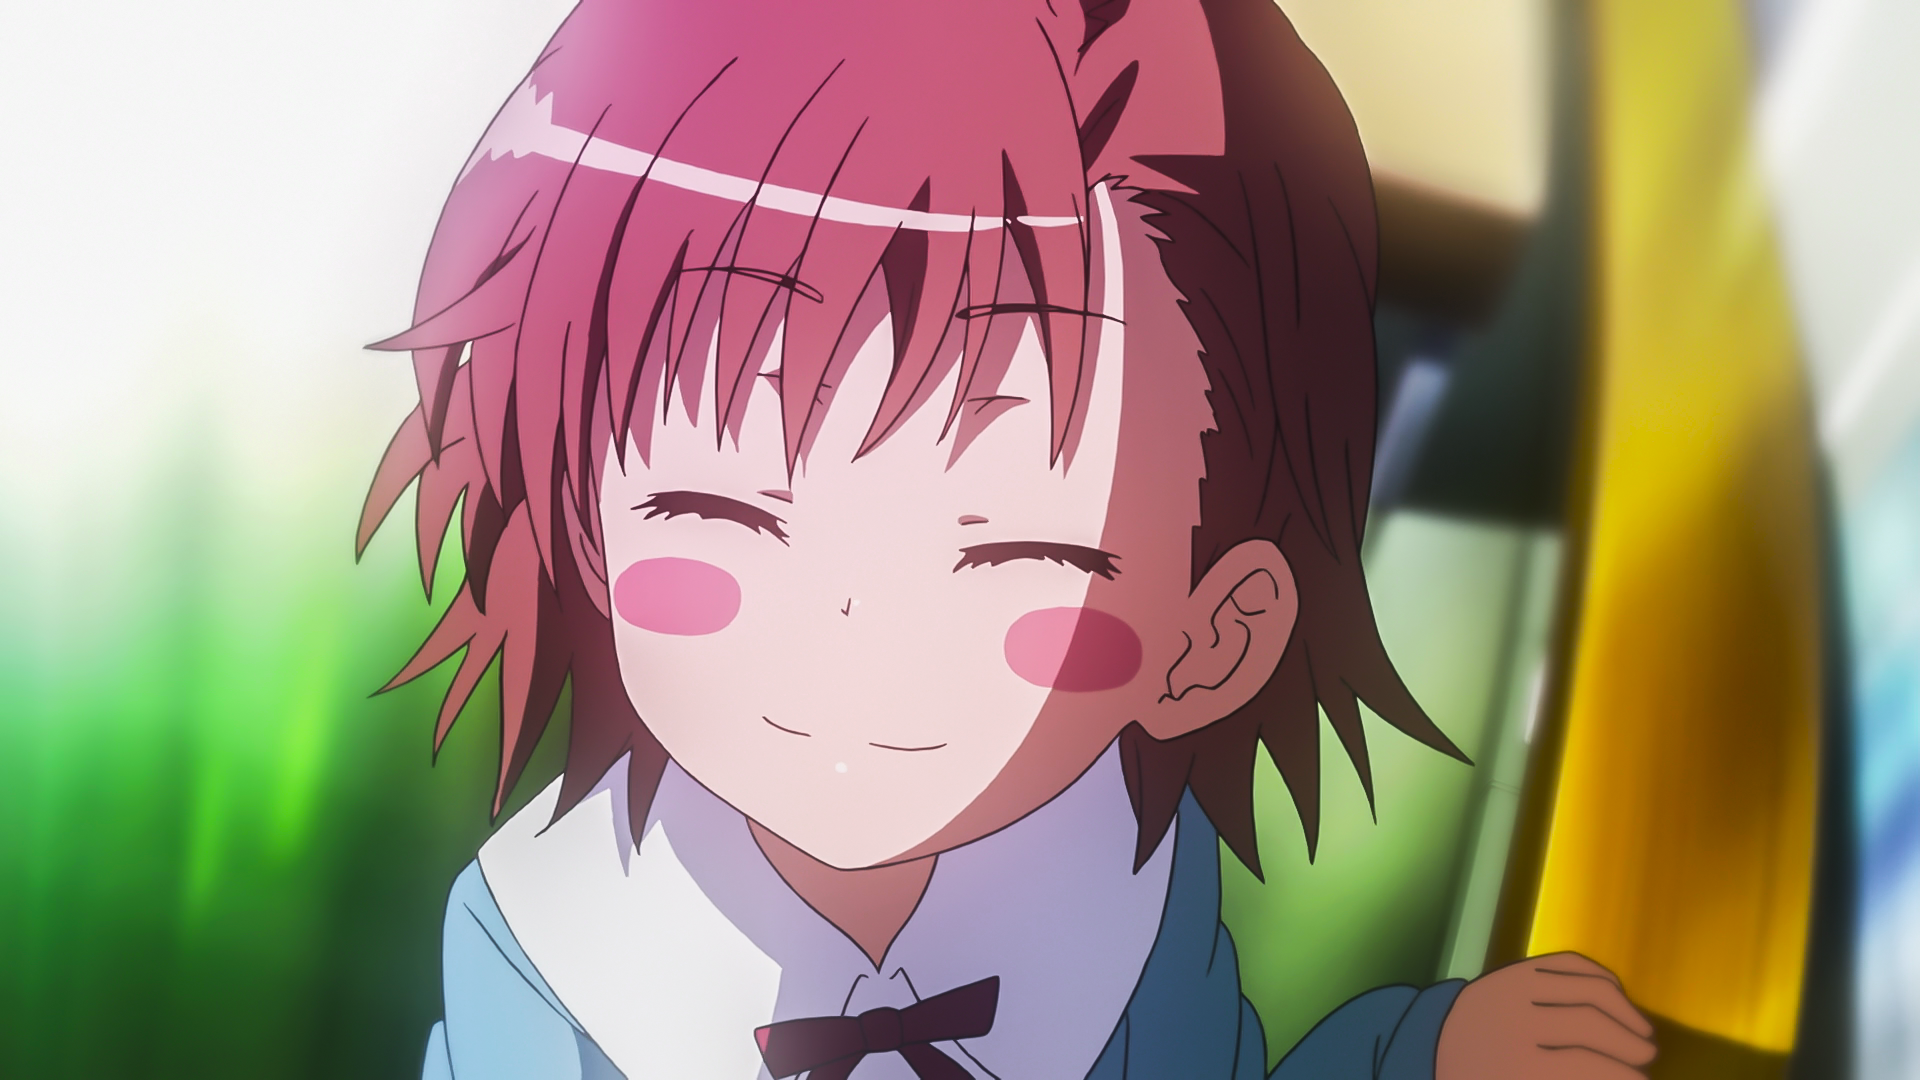 Anime 1920x1080 anime To Aru Kagaku no Railgun Misaka Mikoto anime girls pink hair closed eyes smiling